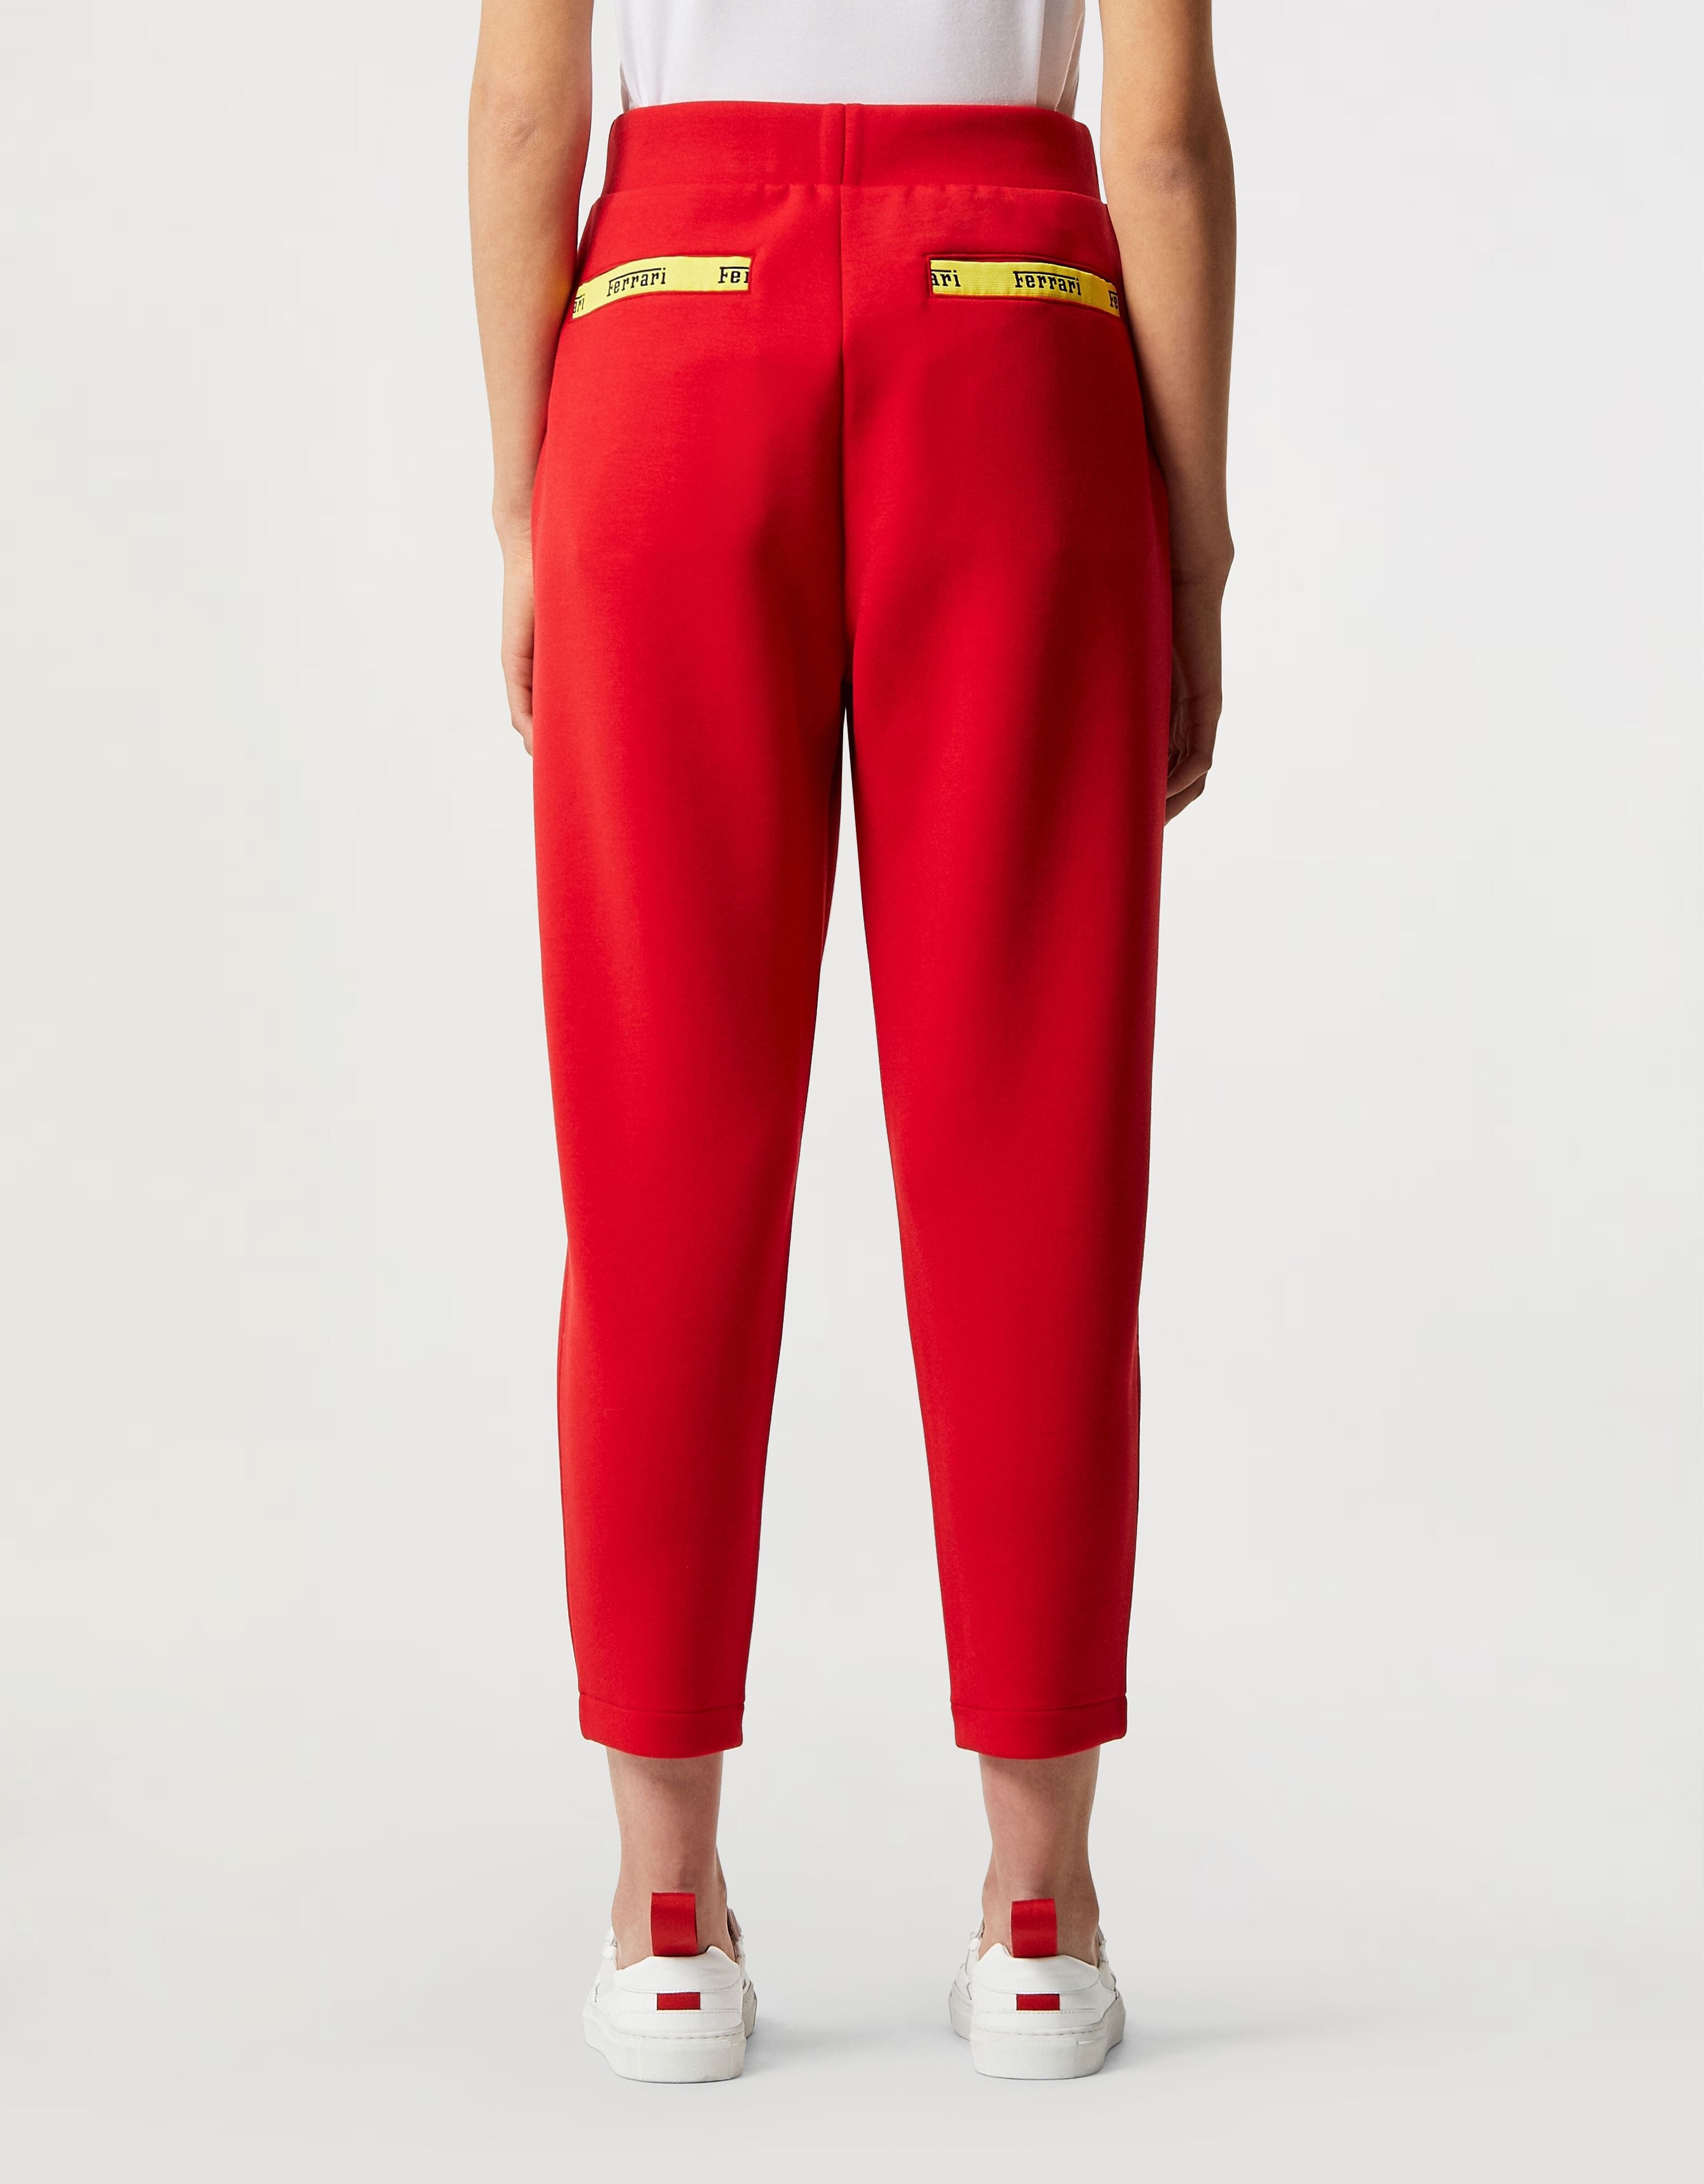 Ferrari Pantalon de jogging femme en tissu réversible Rosso Corsa 46978f